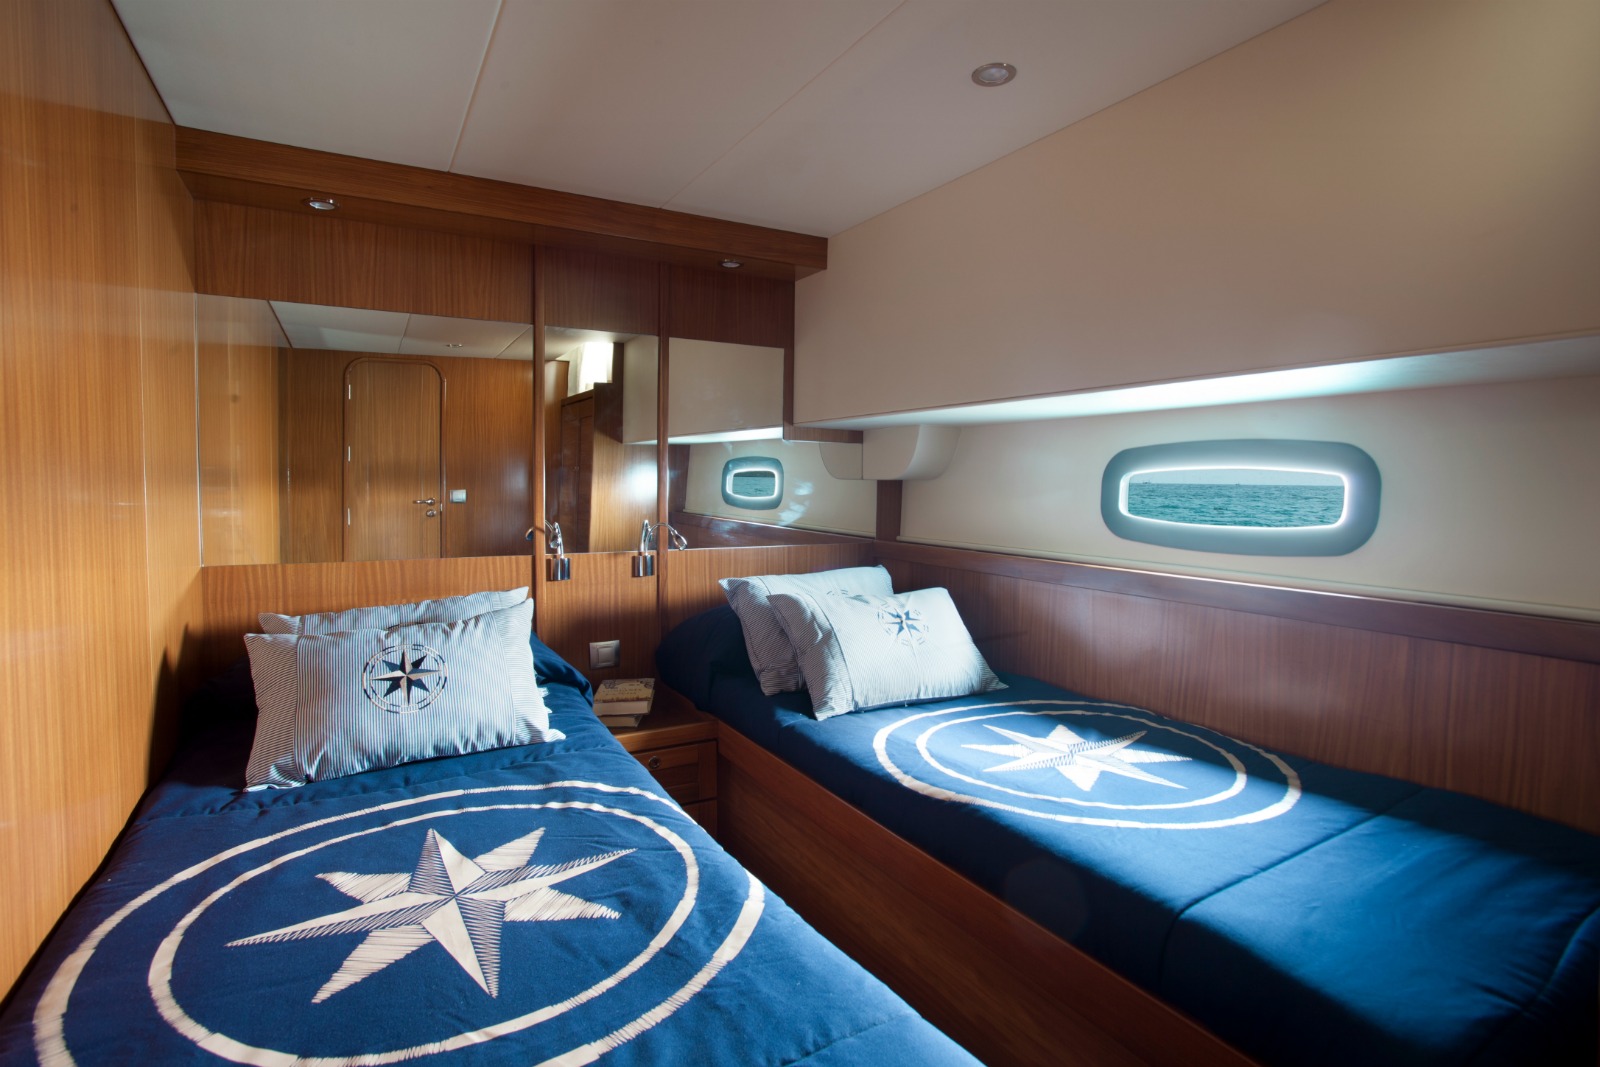 Minorca Islander 54 yacht for sale - Guest Cabin